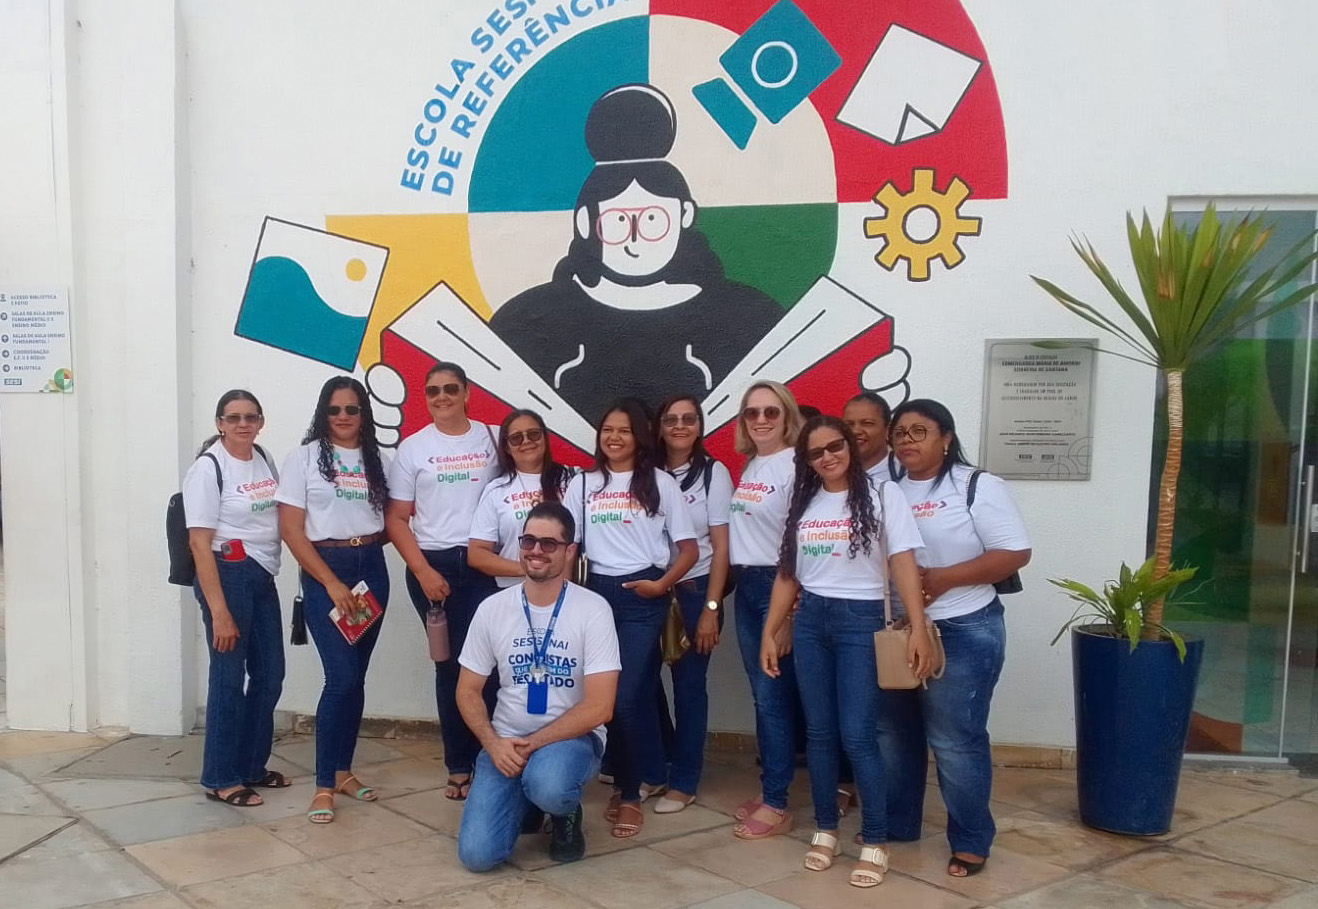 School teachers outside Brazil school supported by Lightsource bp